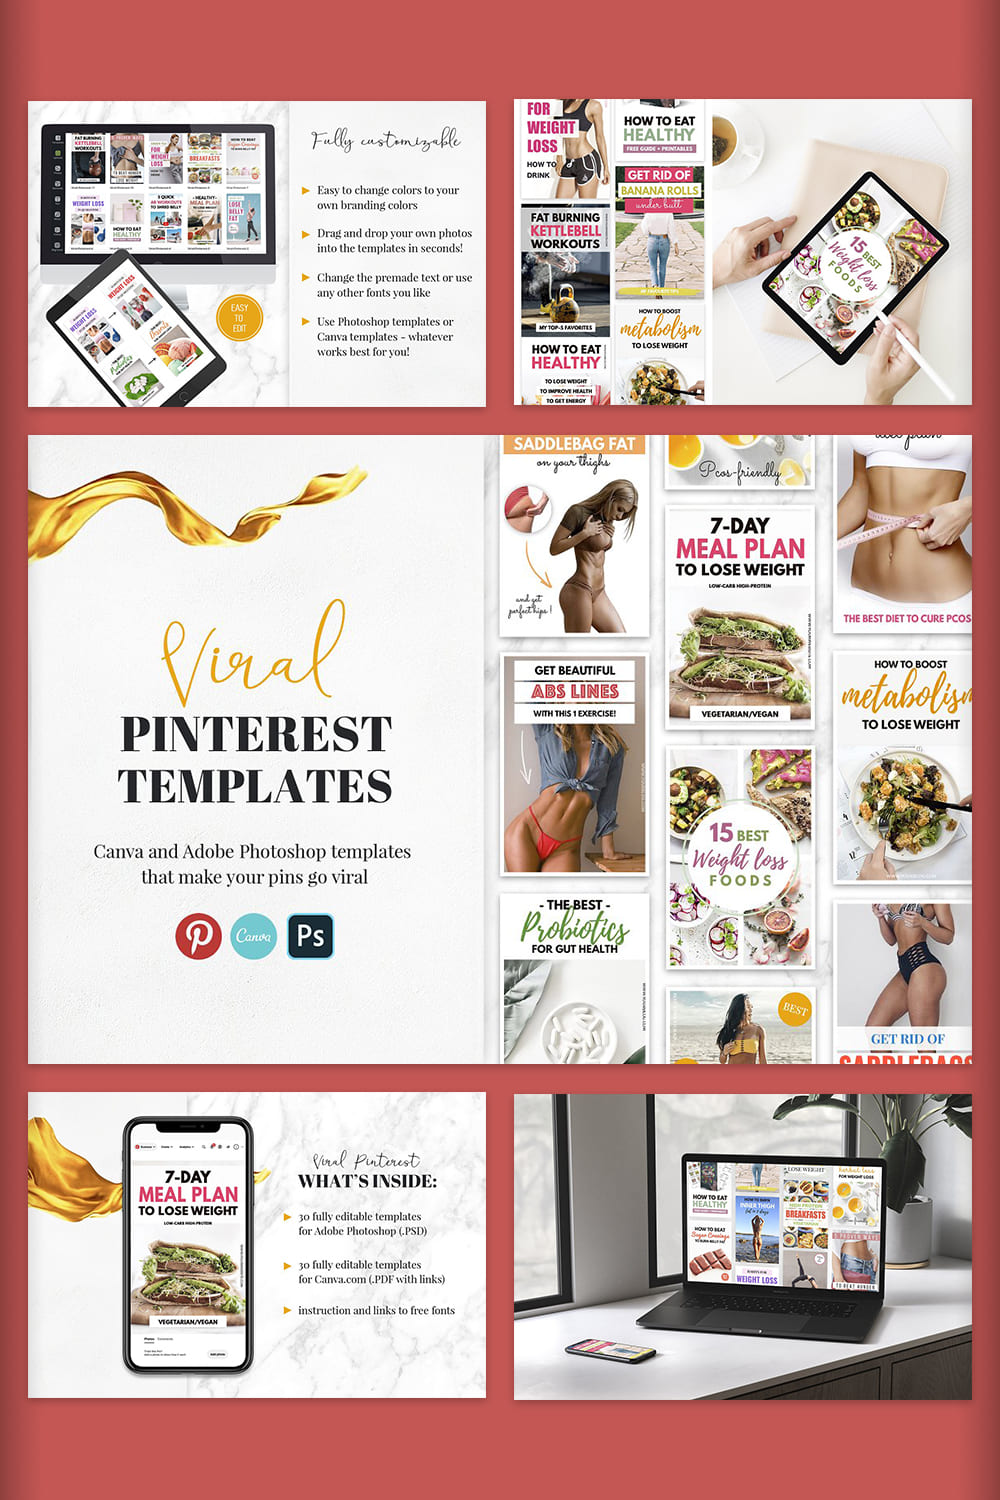 Pinterest- Viral Pinterest Templates Superpack.